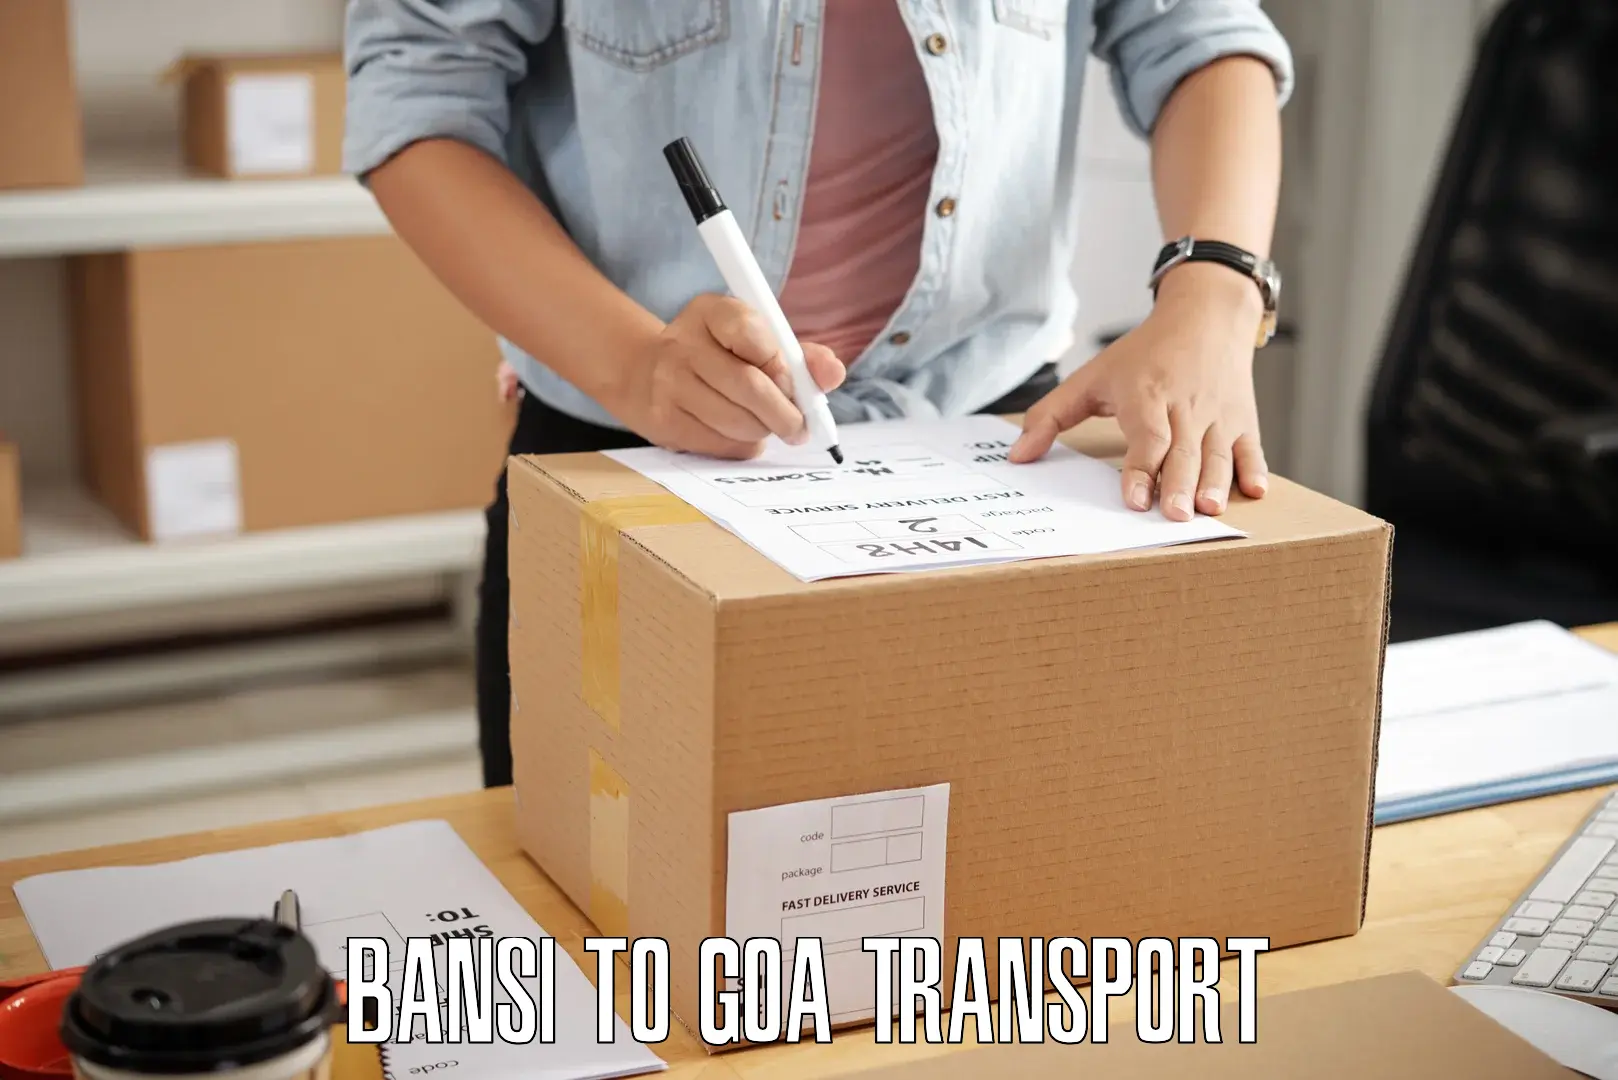 Two wheeler parcel service Bansi to Goa